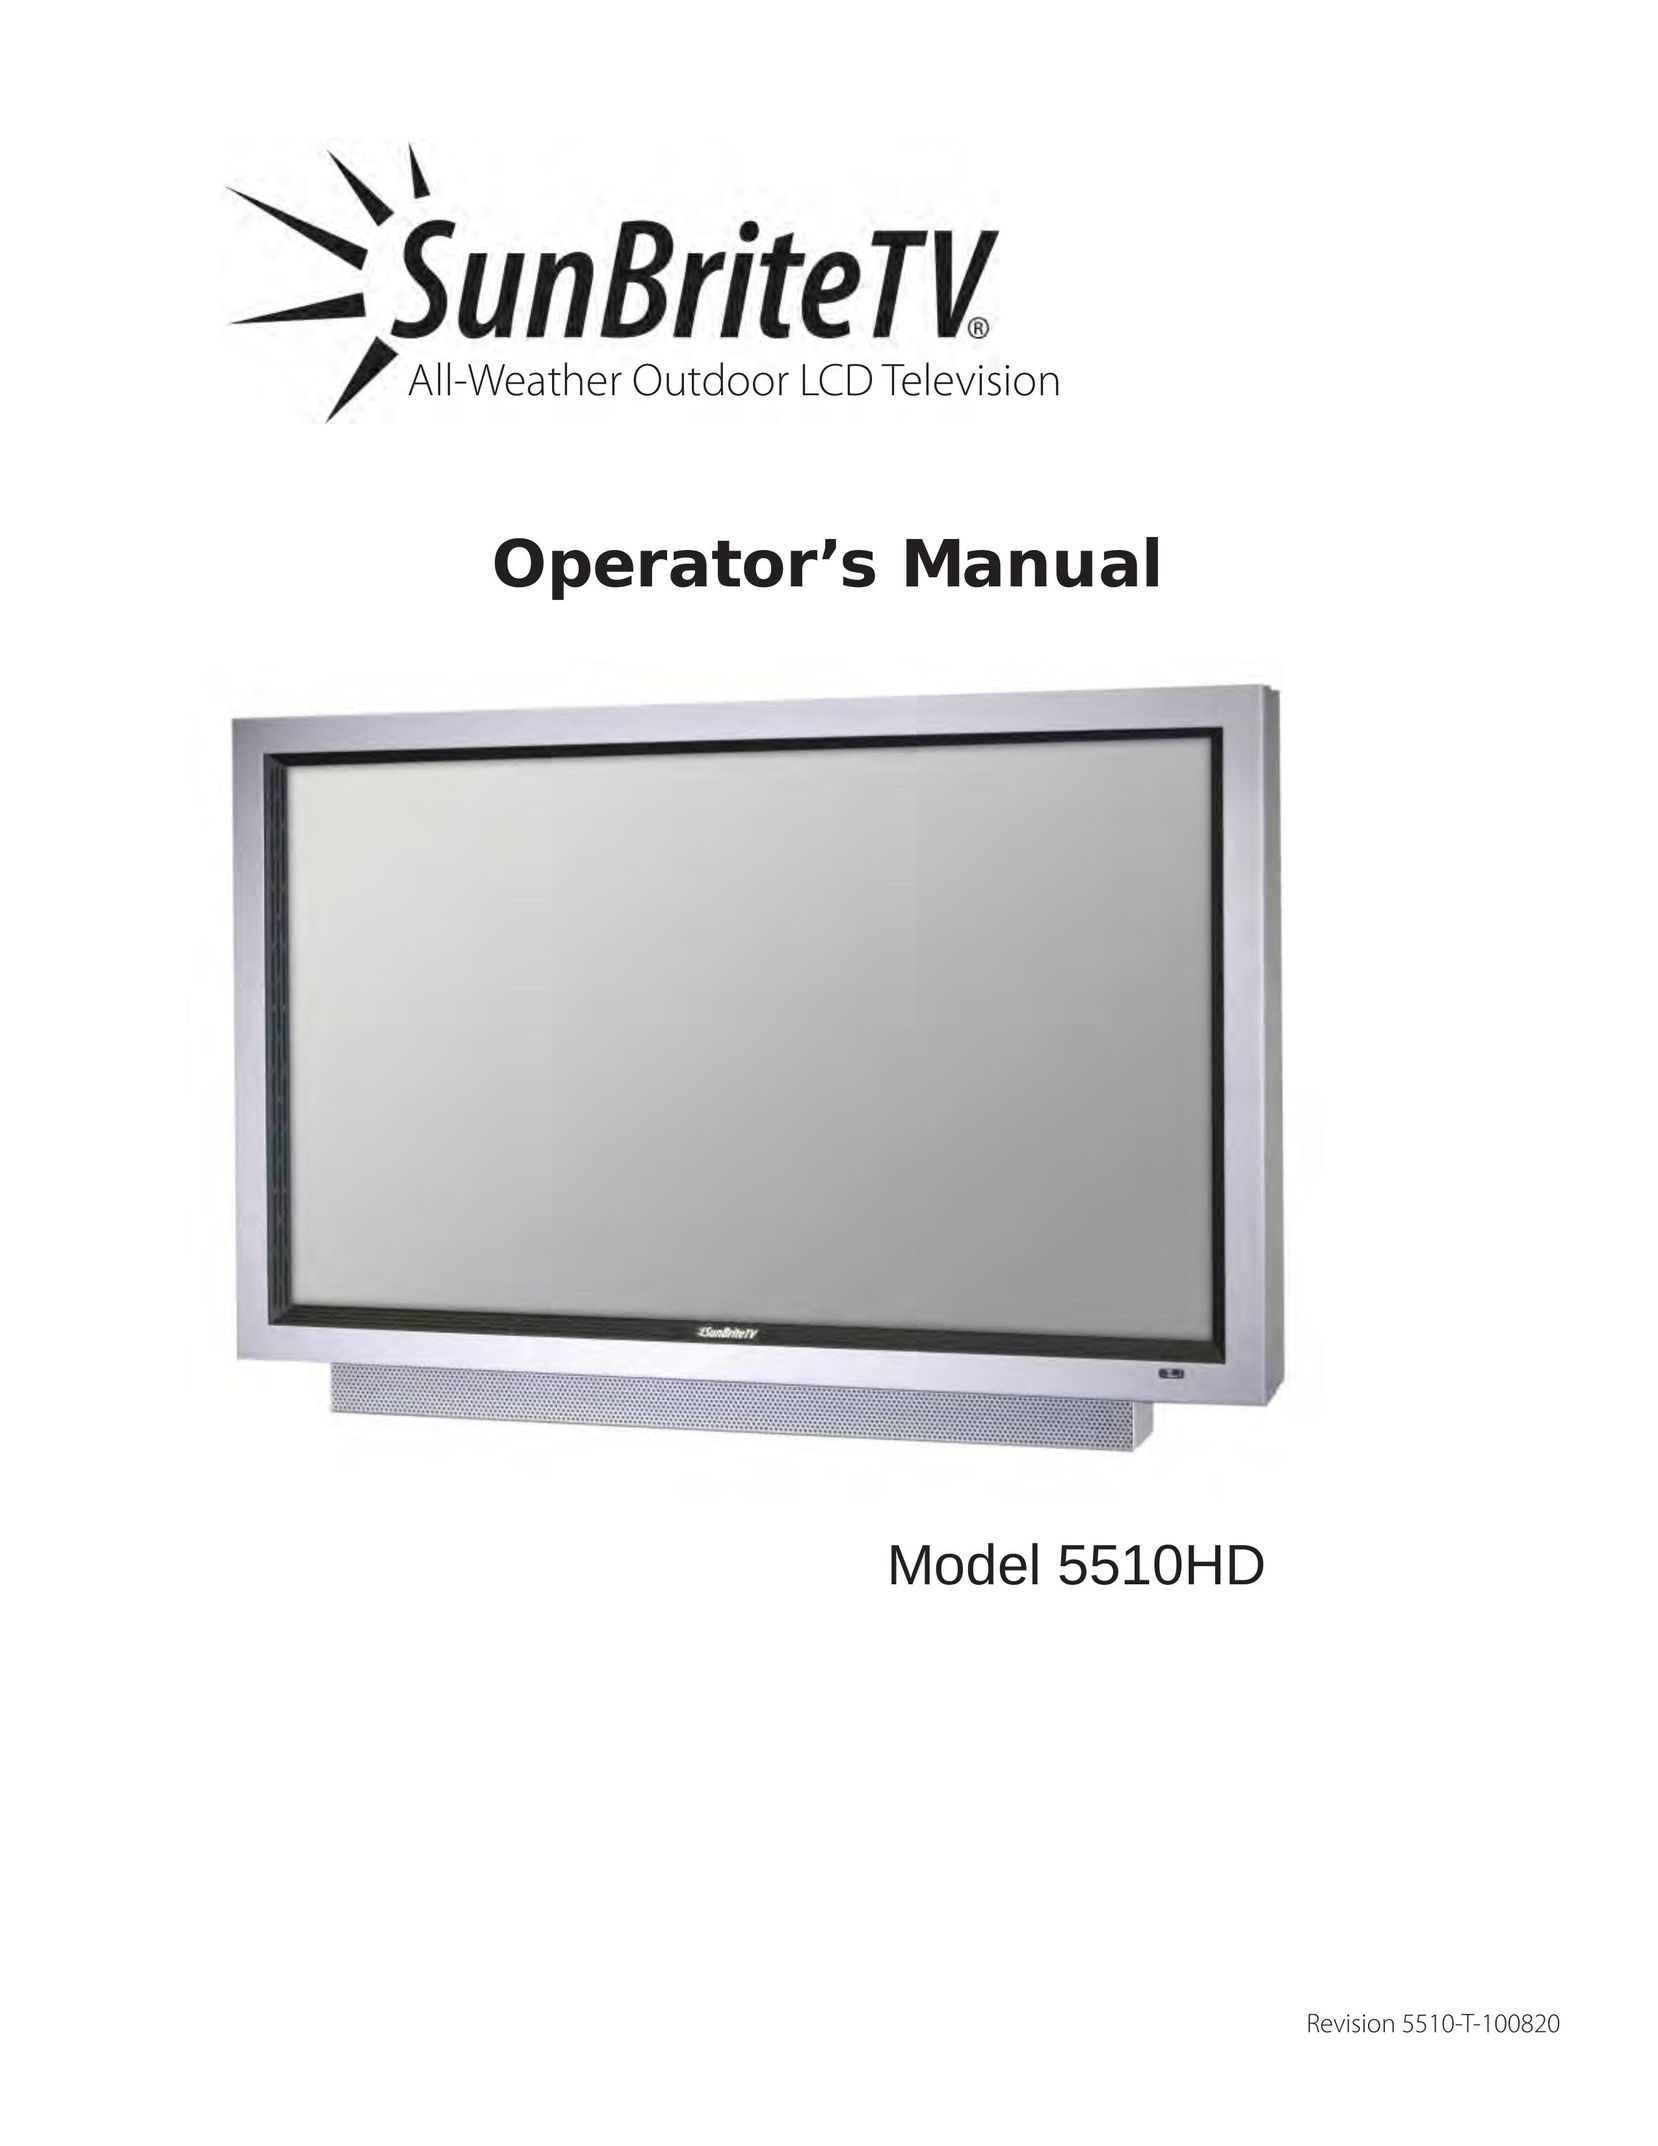 SunBriteTV 5510HD Flat Panel Television User Manual